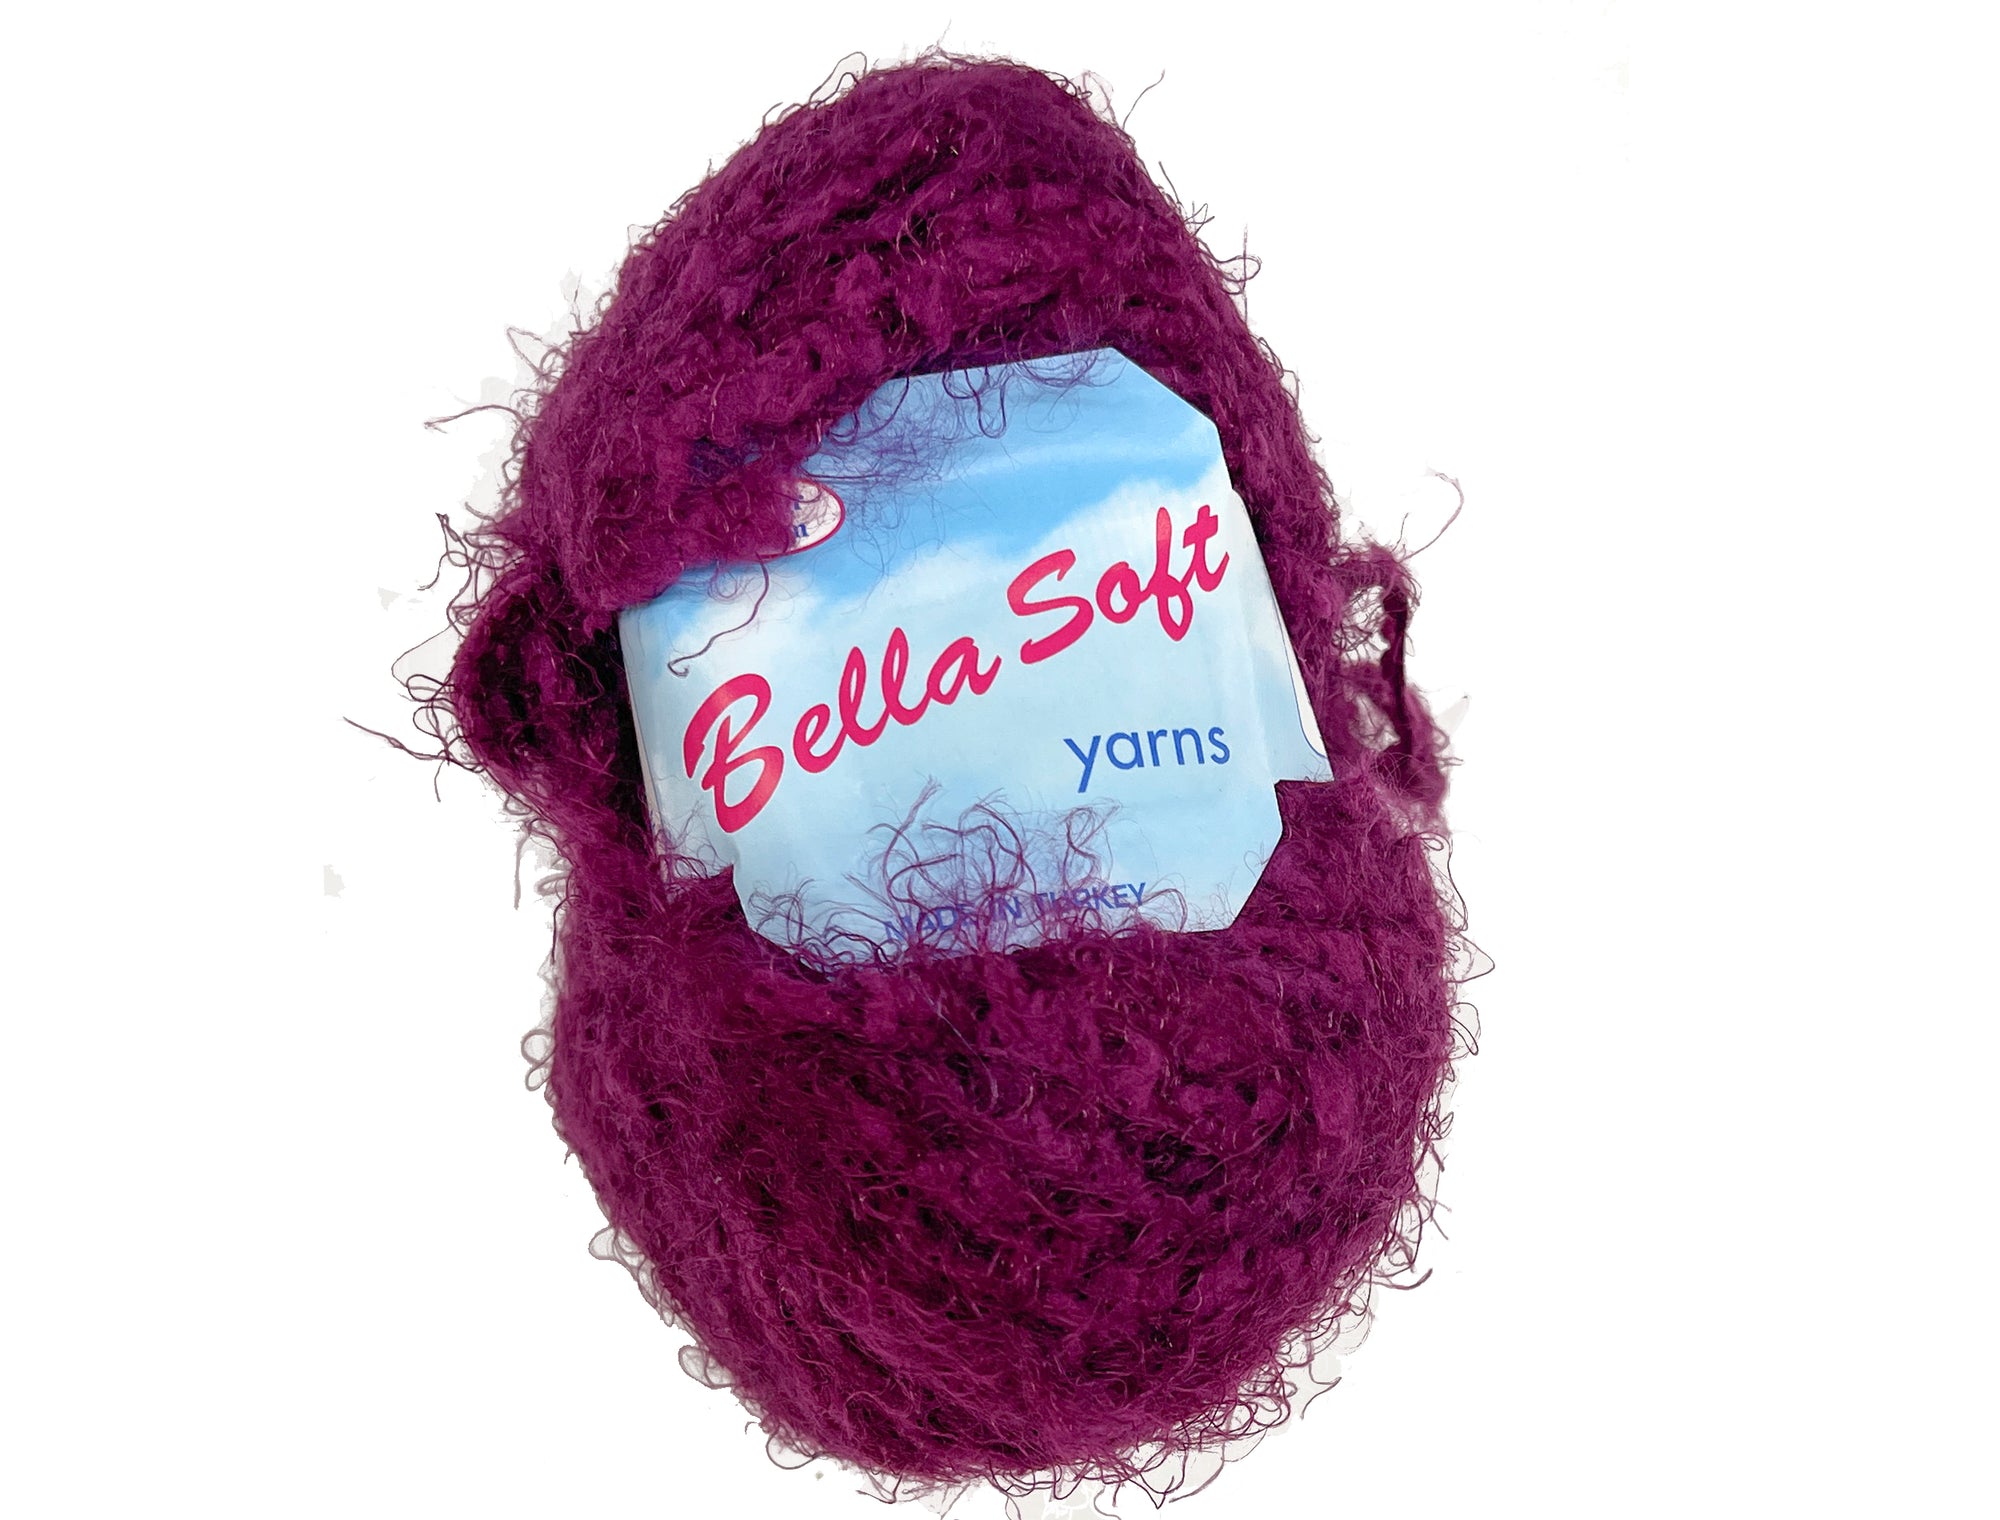 Bella Soft Panda Plush Yarn 110 Yds